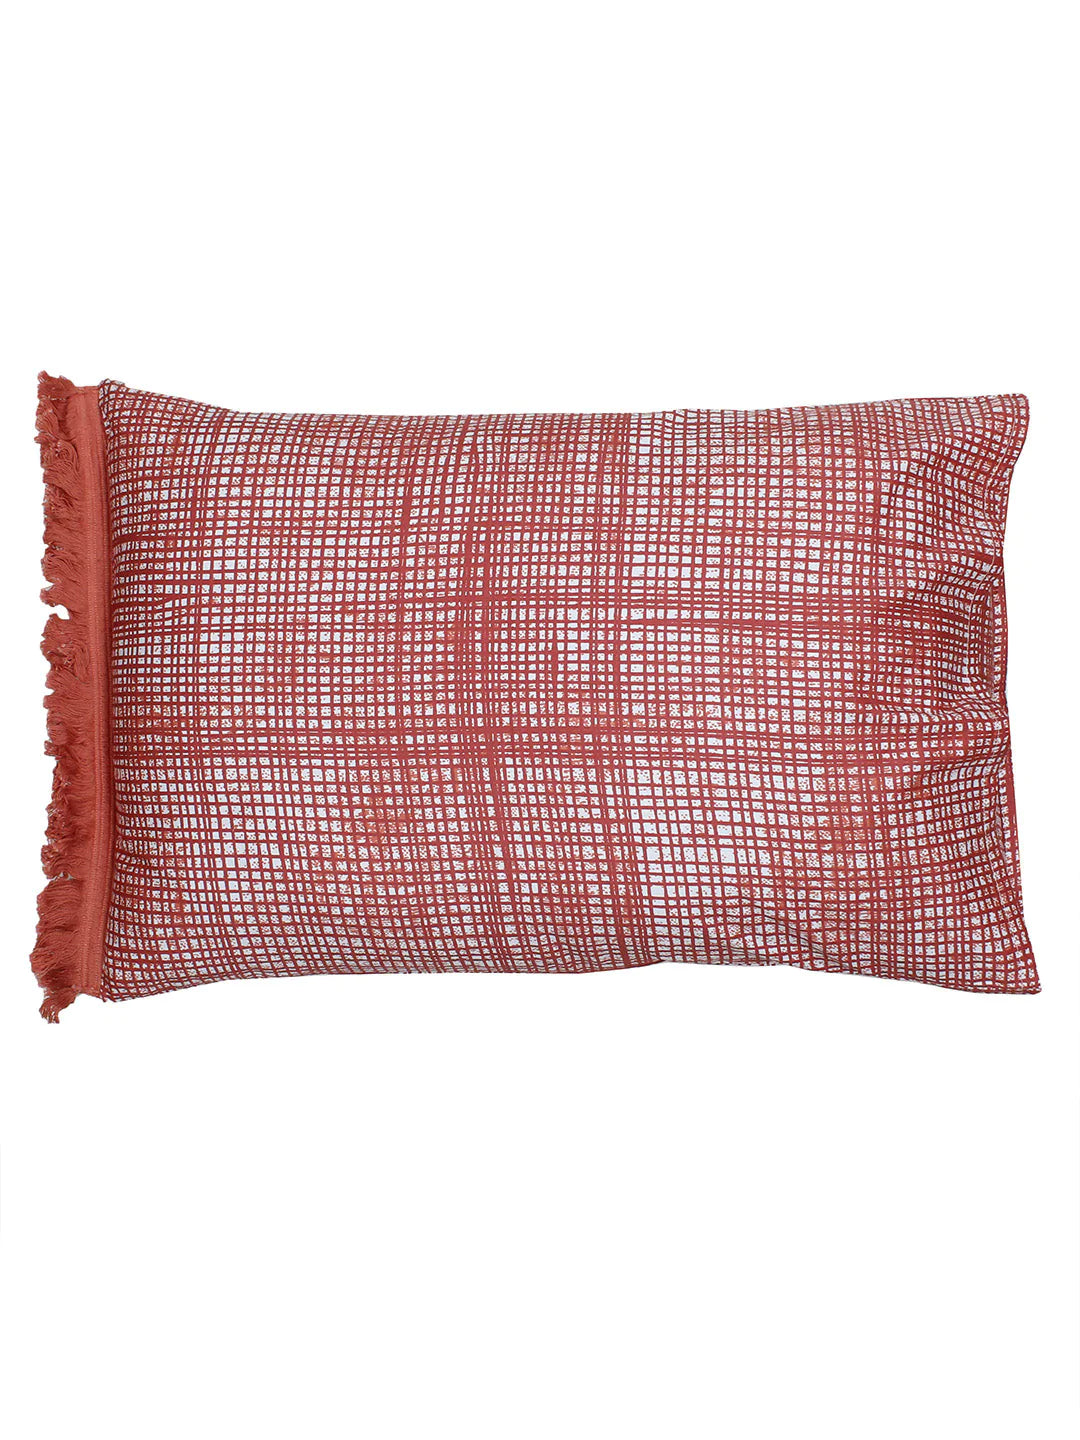 Kattam-Kuta Red Pillow Cover